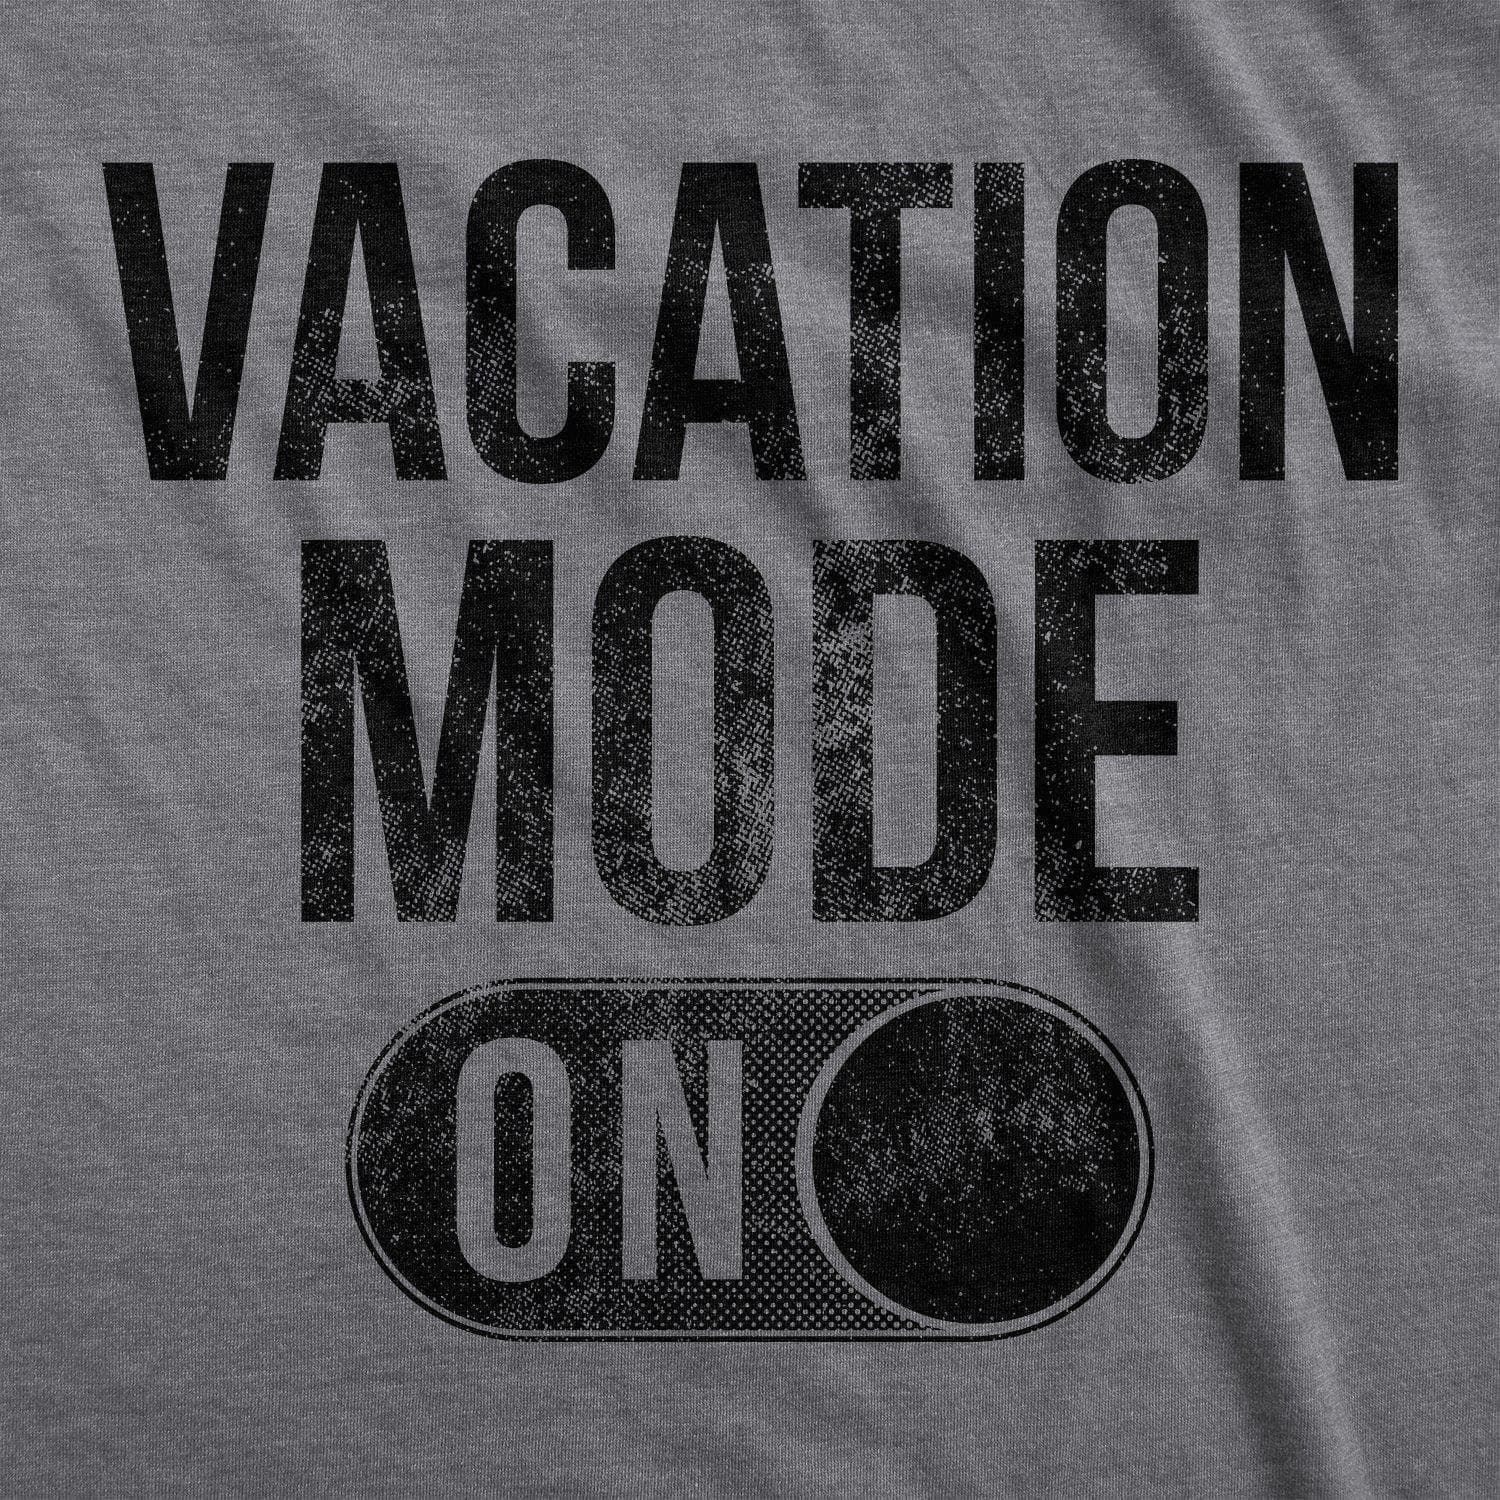 Vacation Mode Men's Tshirt  -  Crazy Dog T-Shirts